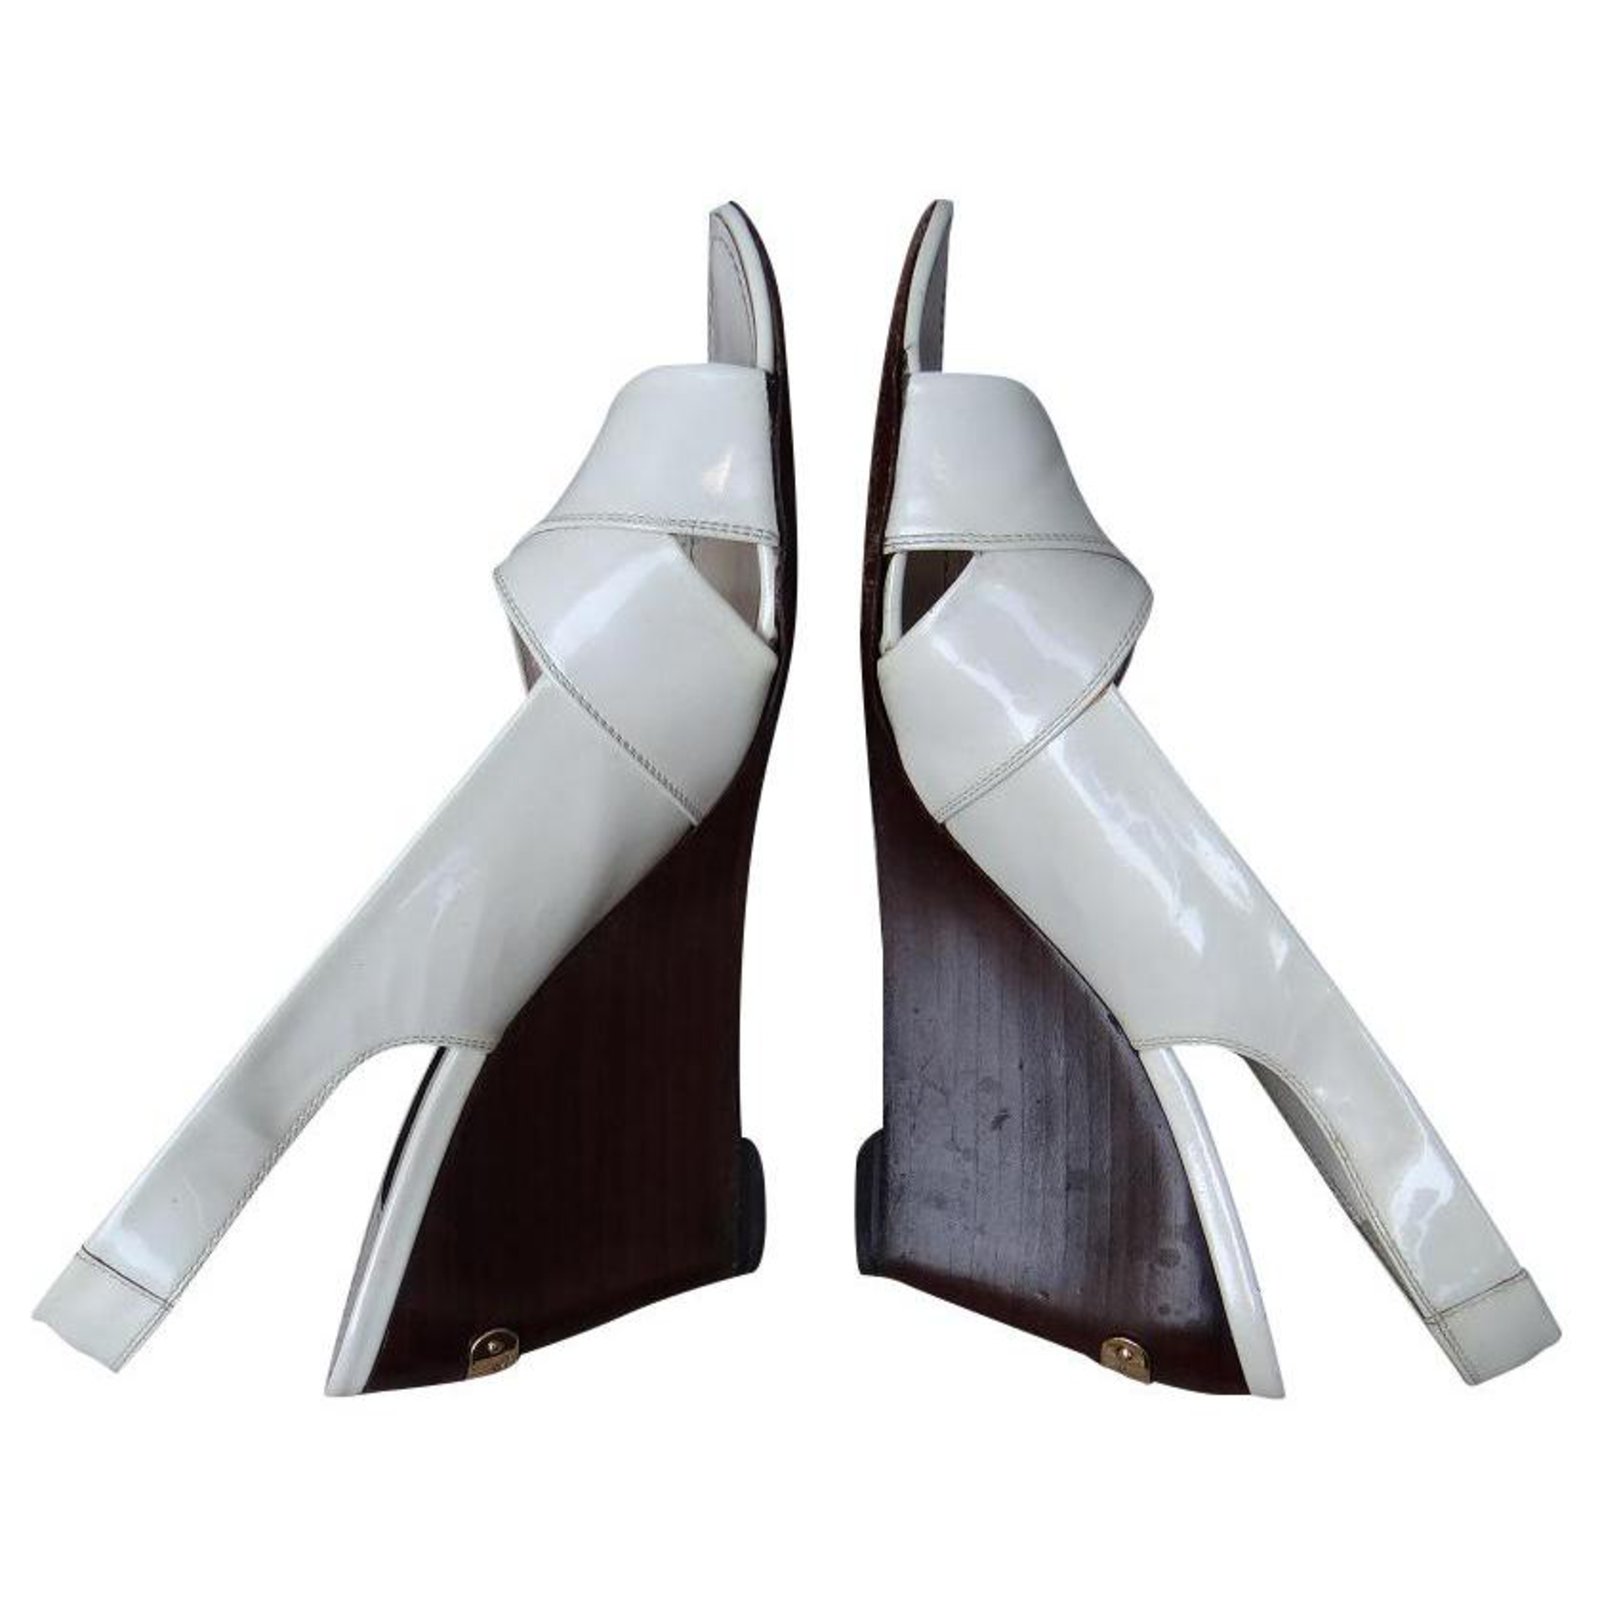 Louis Vuitton Silver Sandals for Women